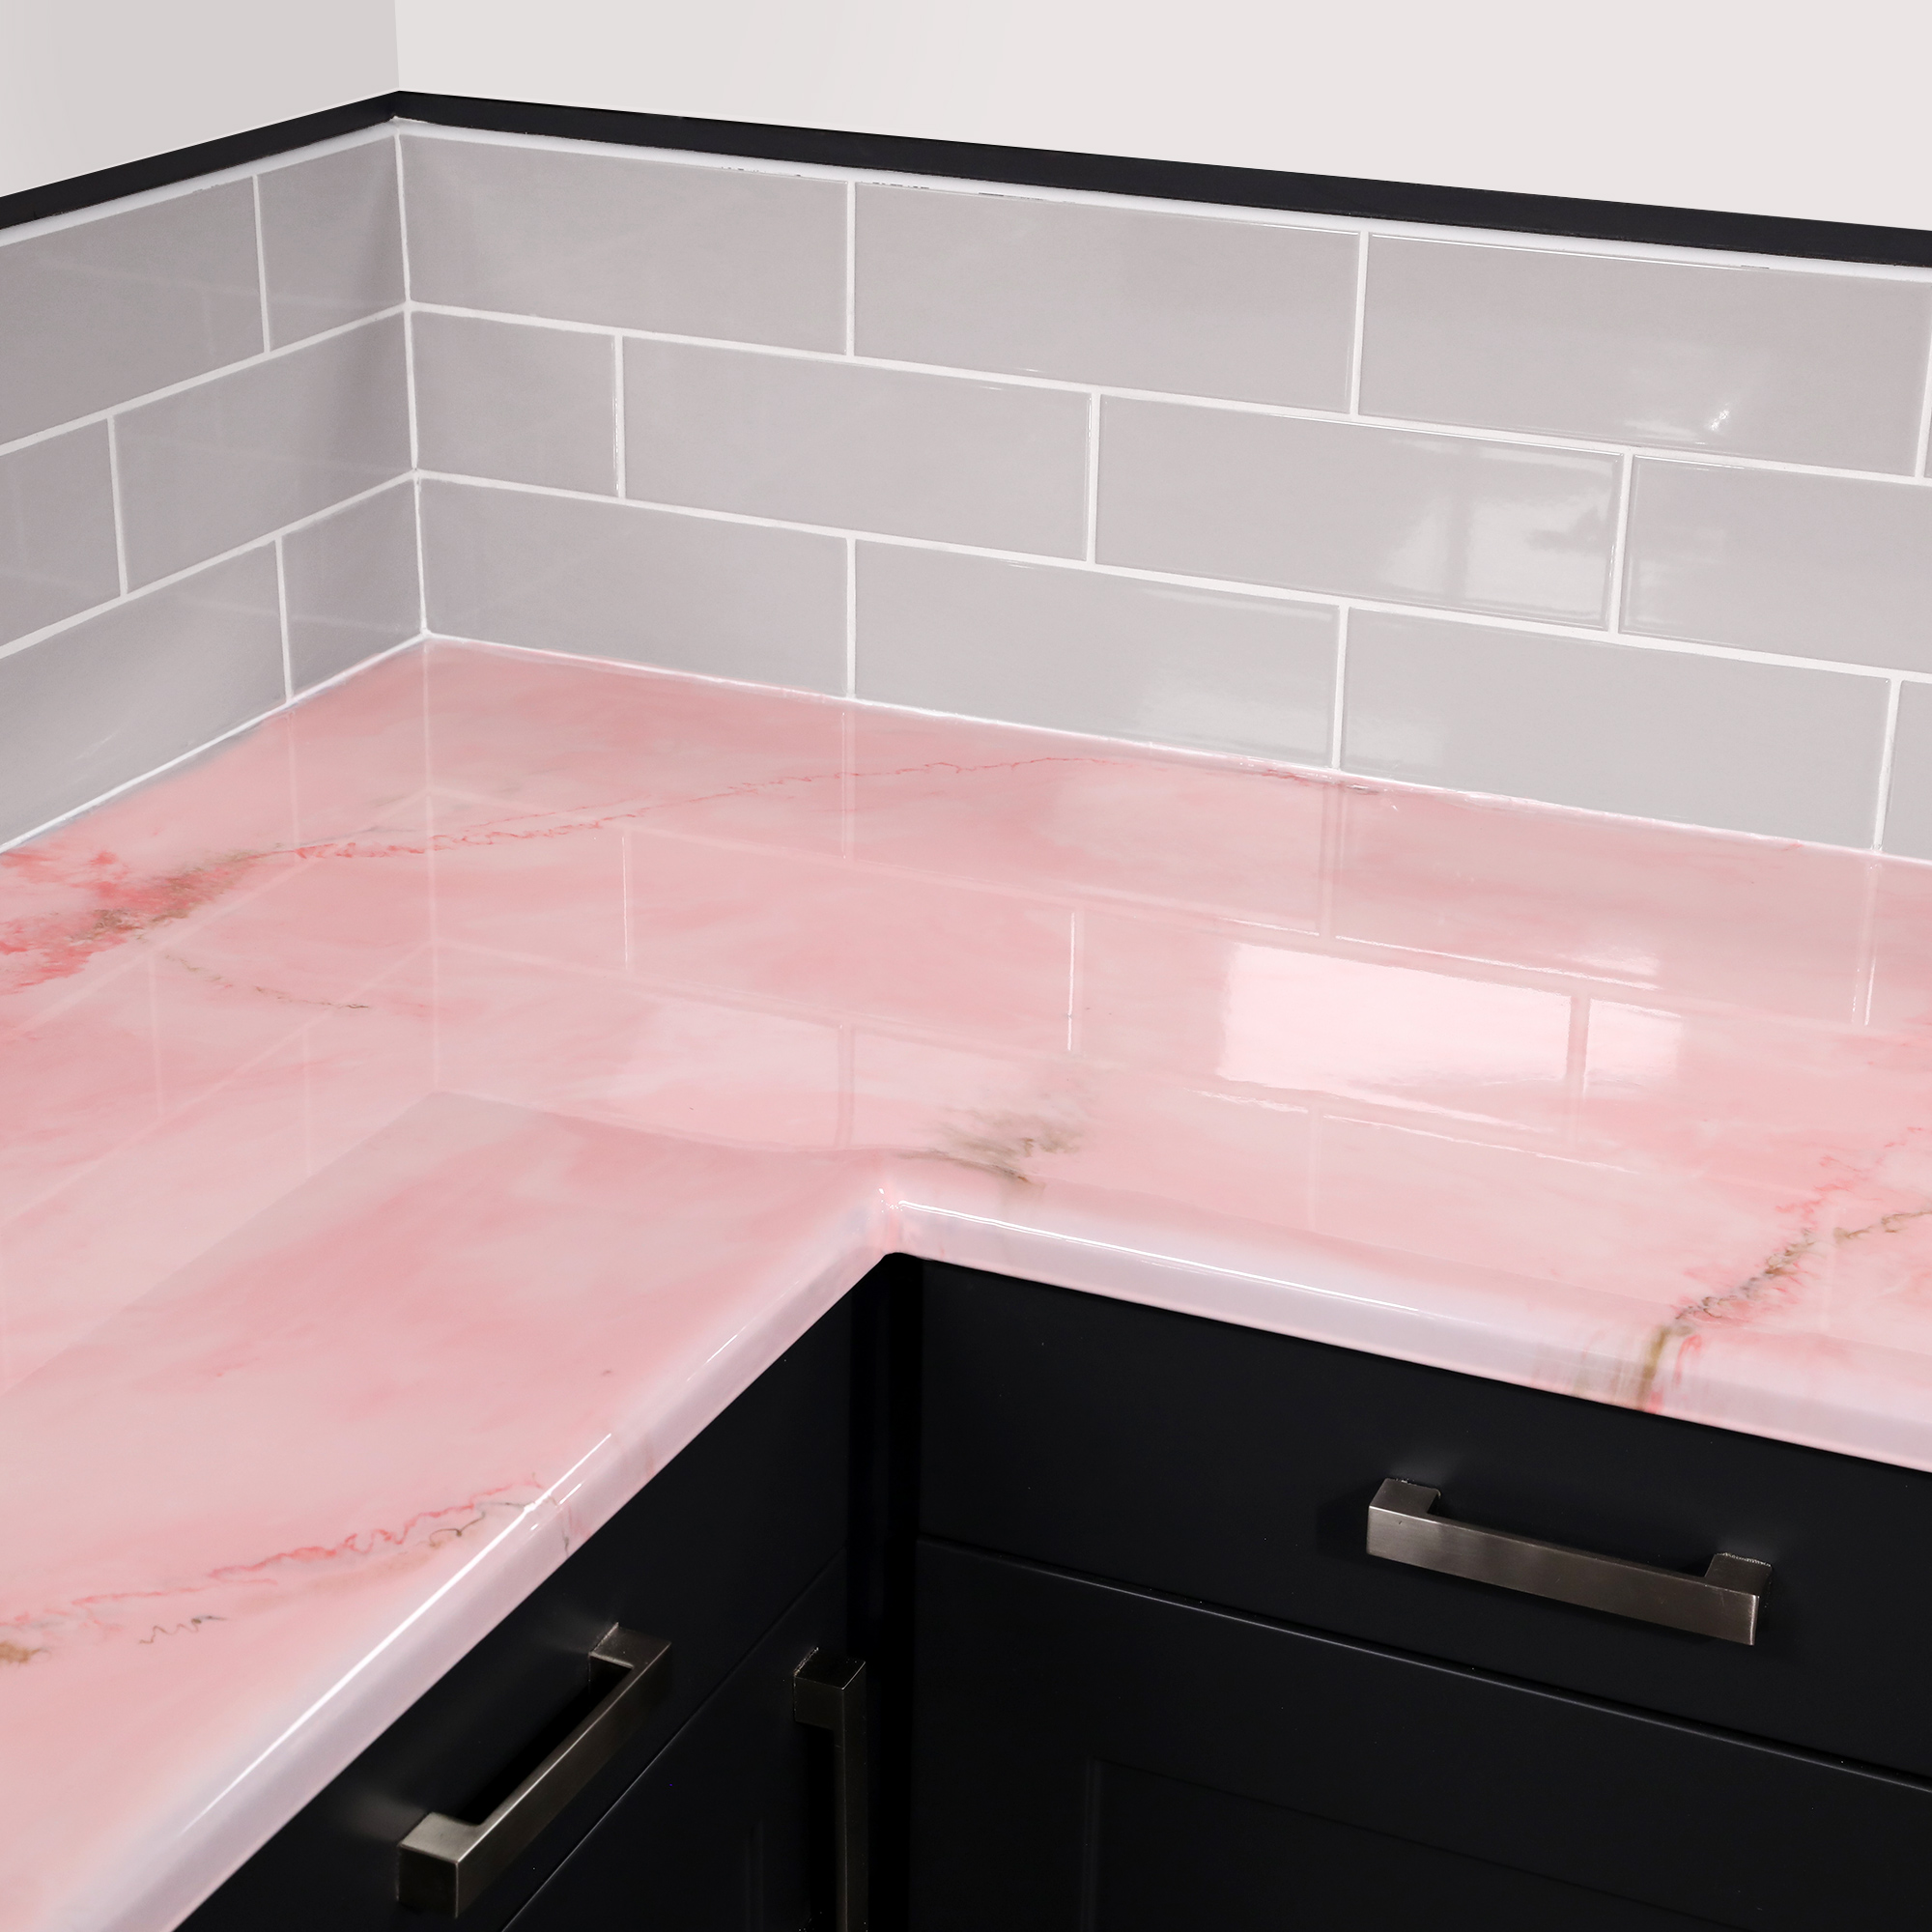 pink quartz countertop kitchen